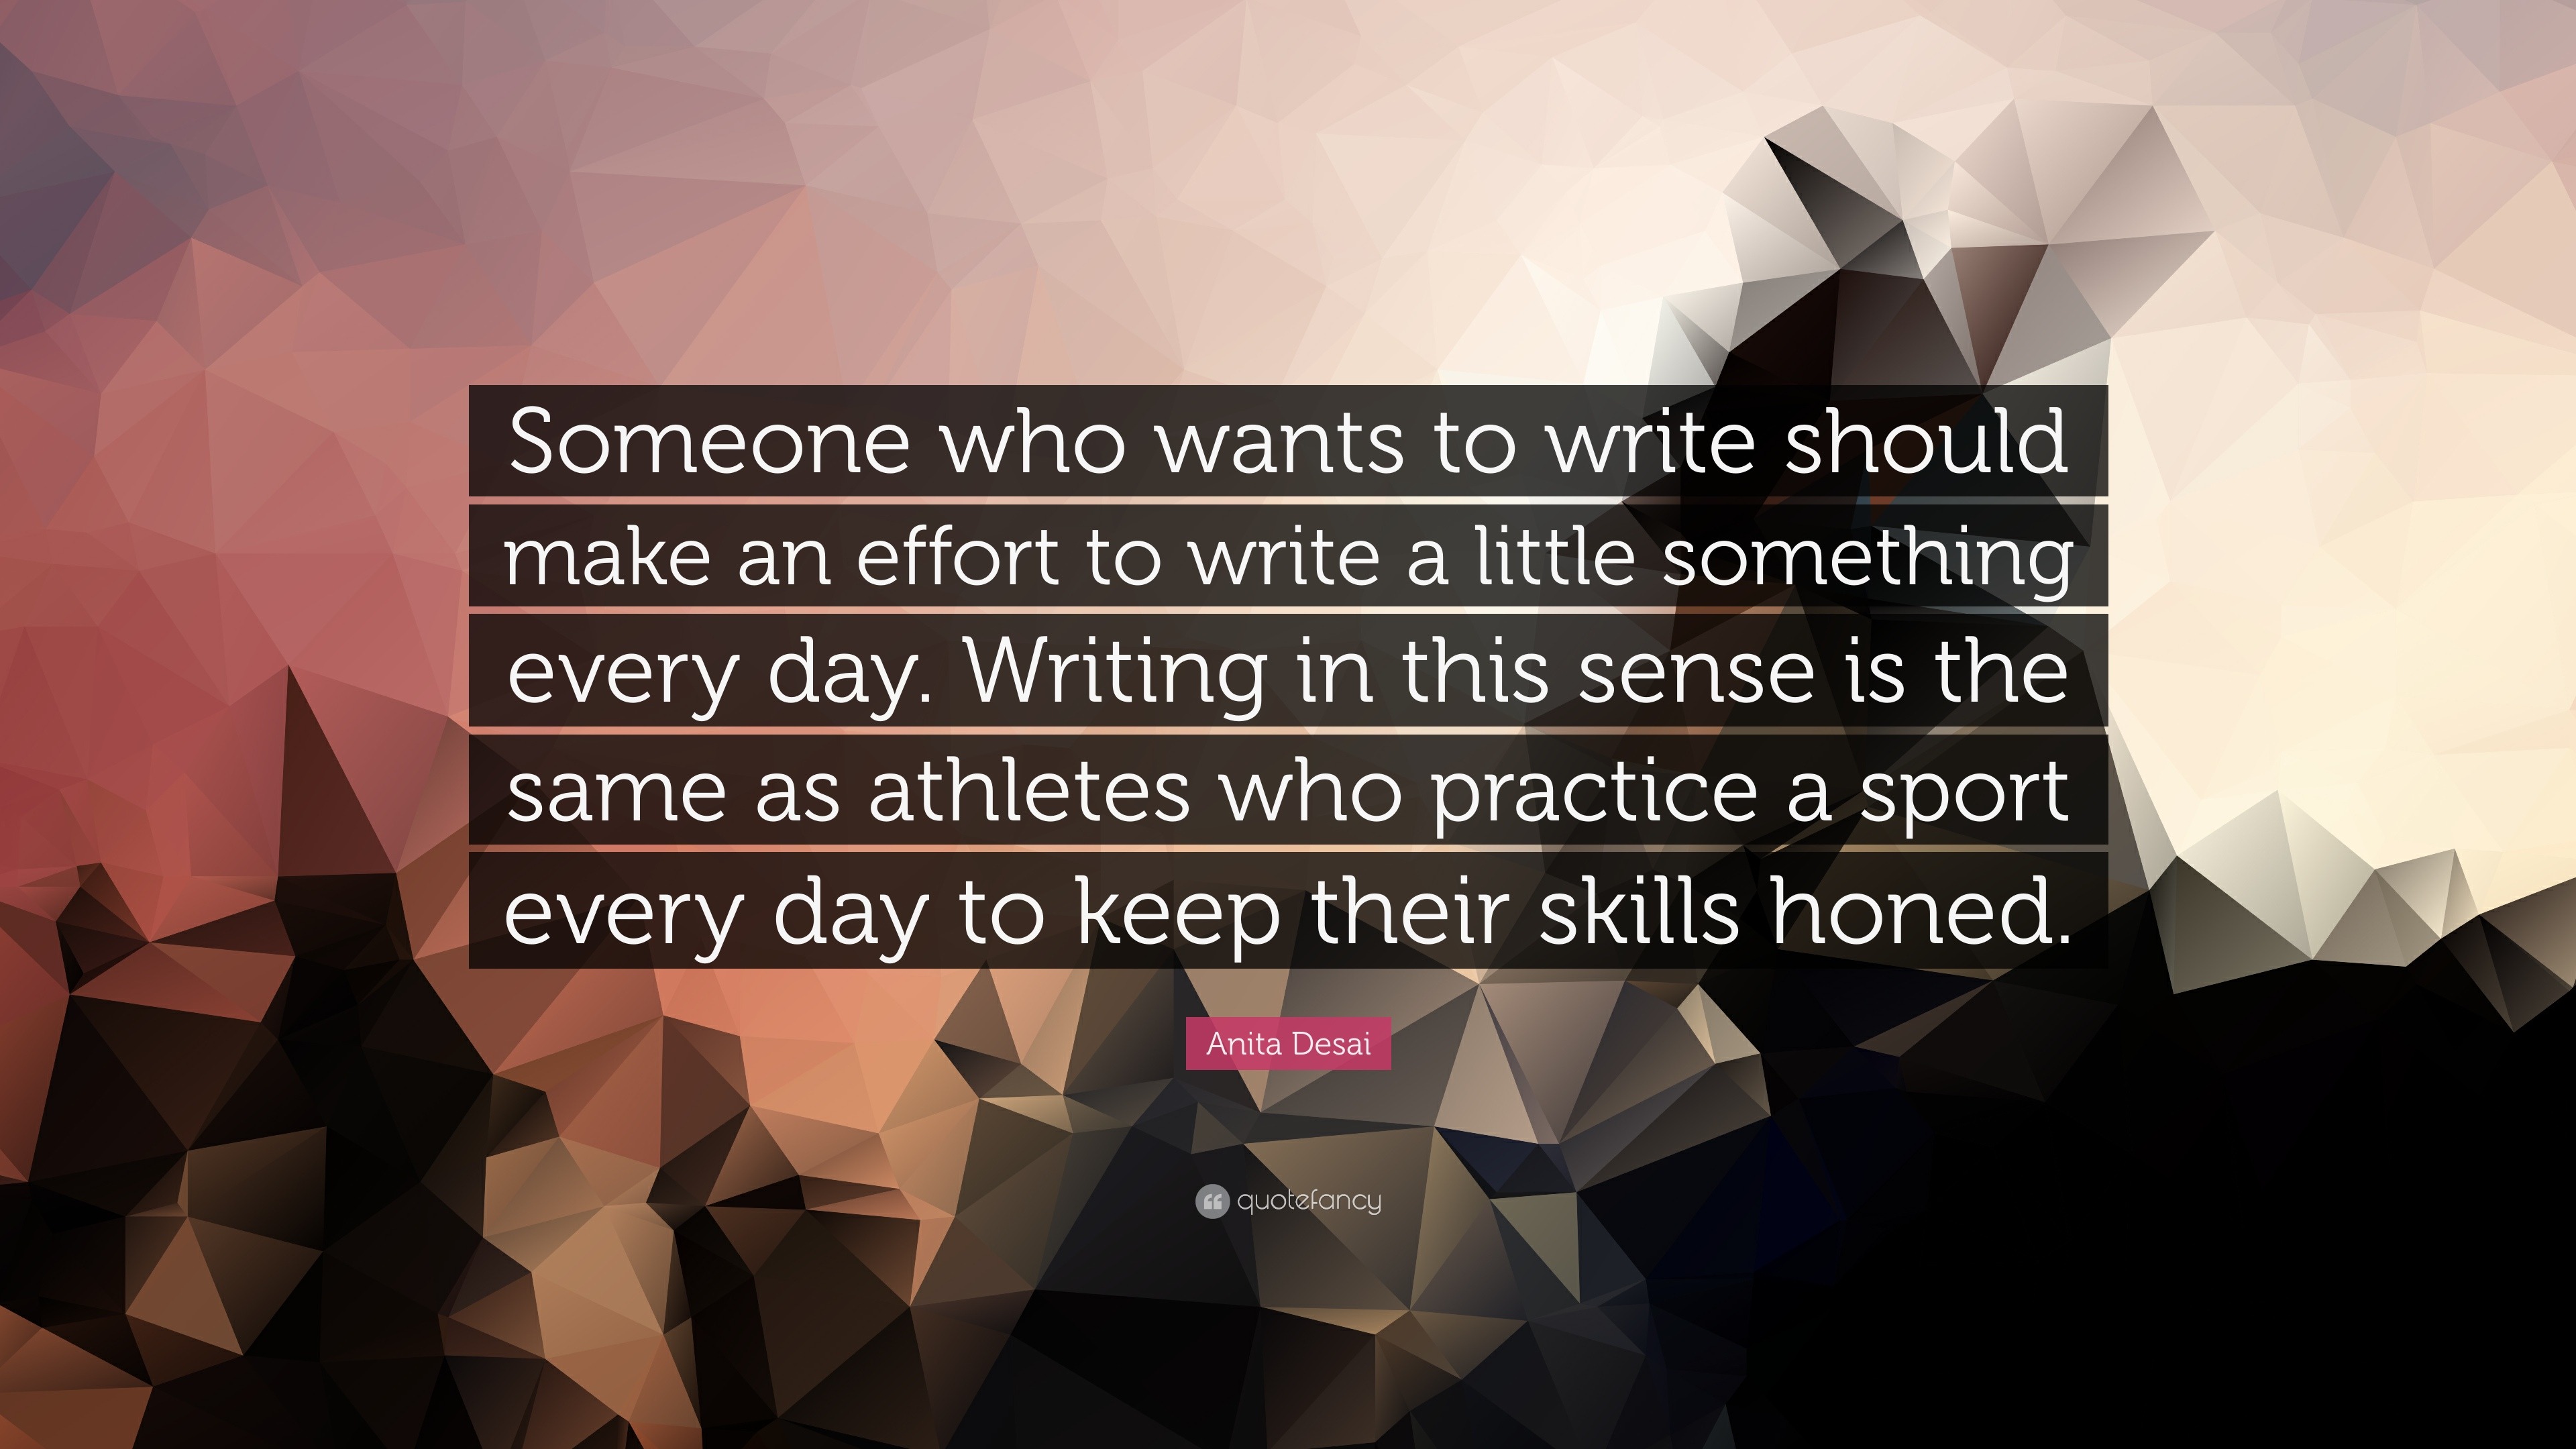 Anita Desai Quote: “Someone who wants to write should make an